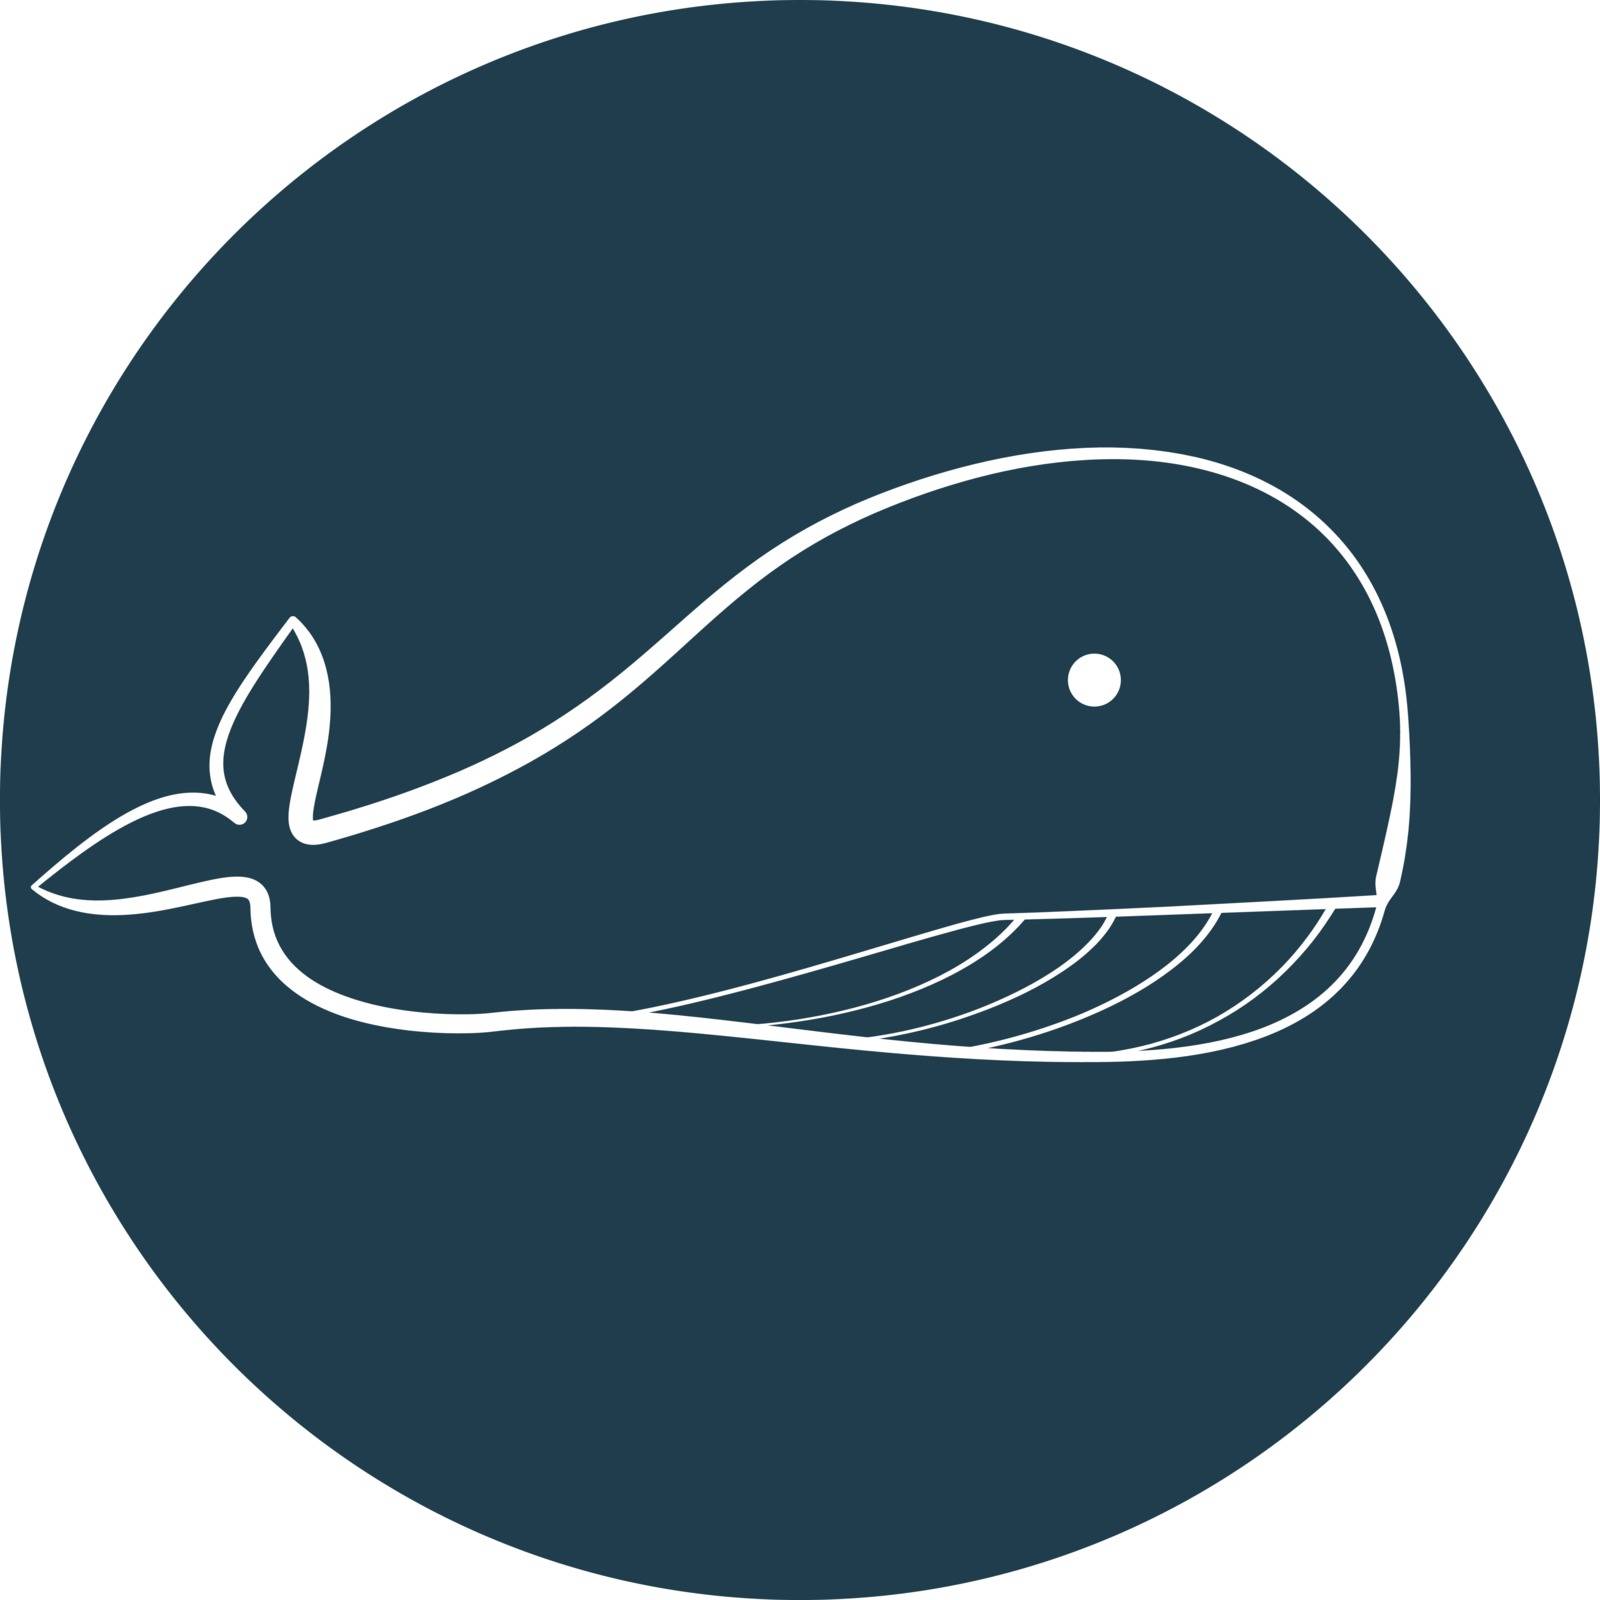 White outline whale icon on dark blue background